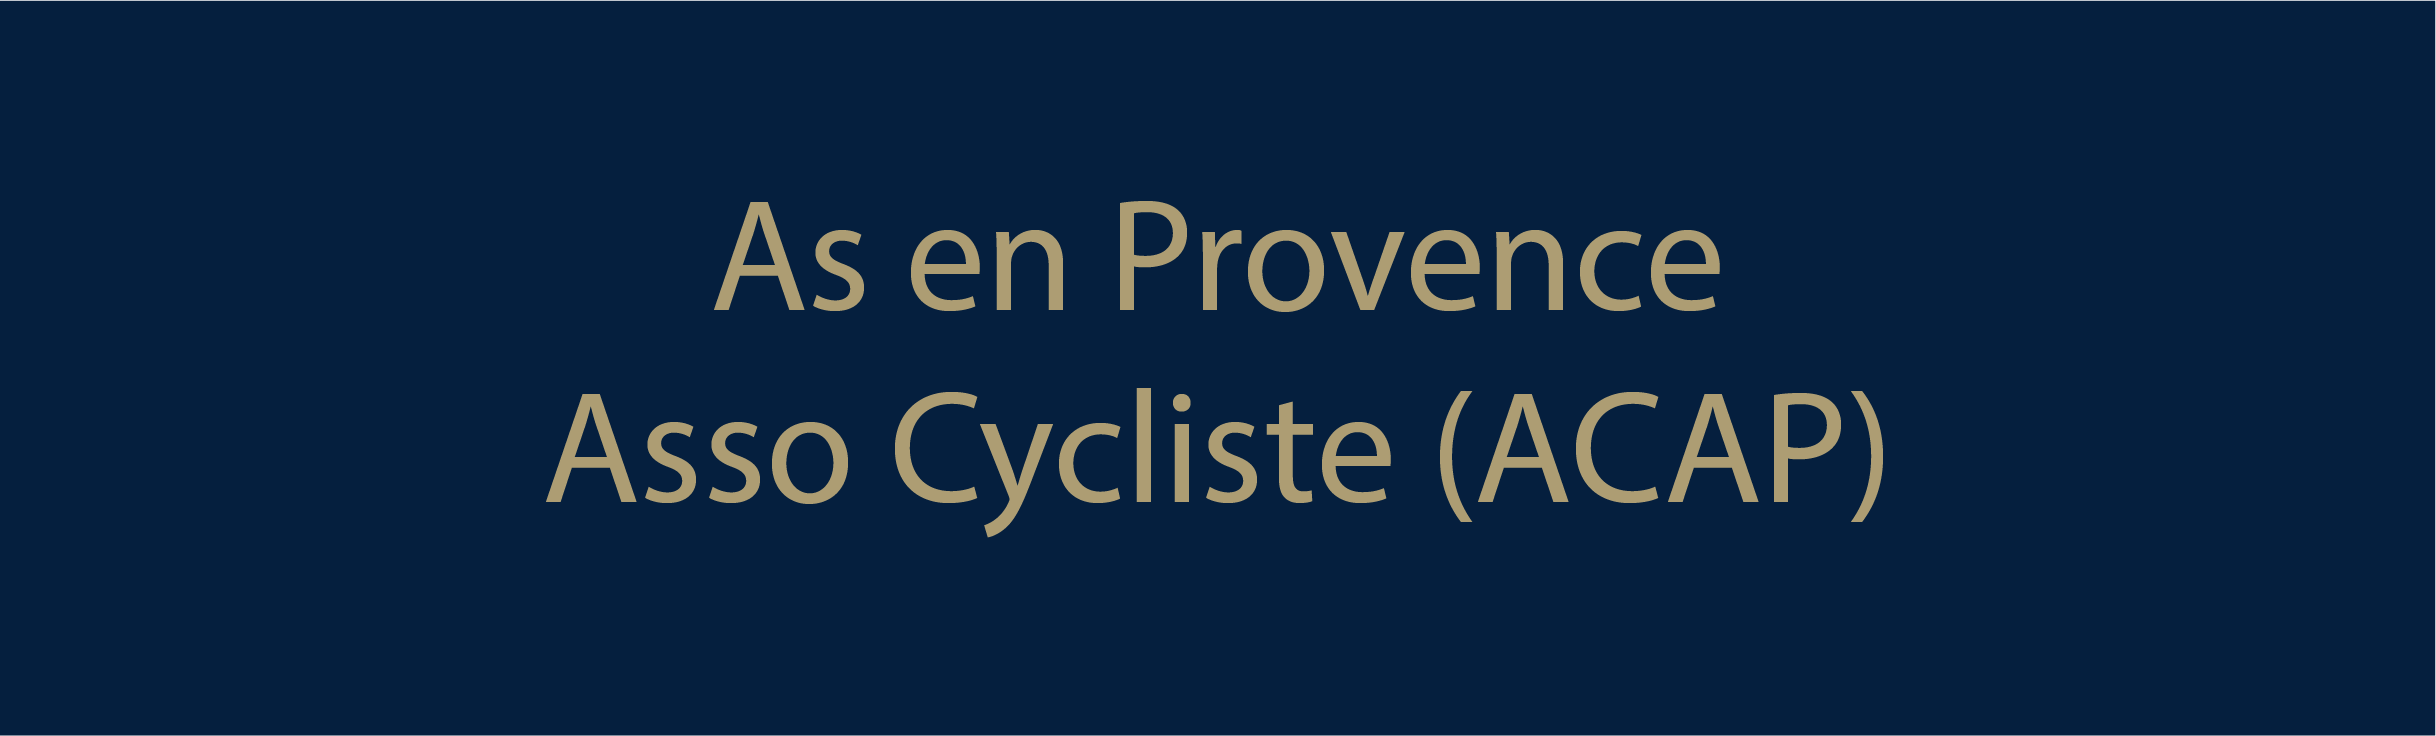 Association Cycliste des As en Provence (ACAP) 